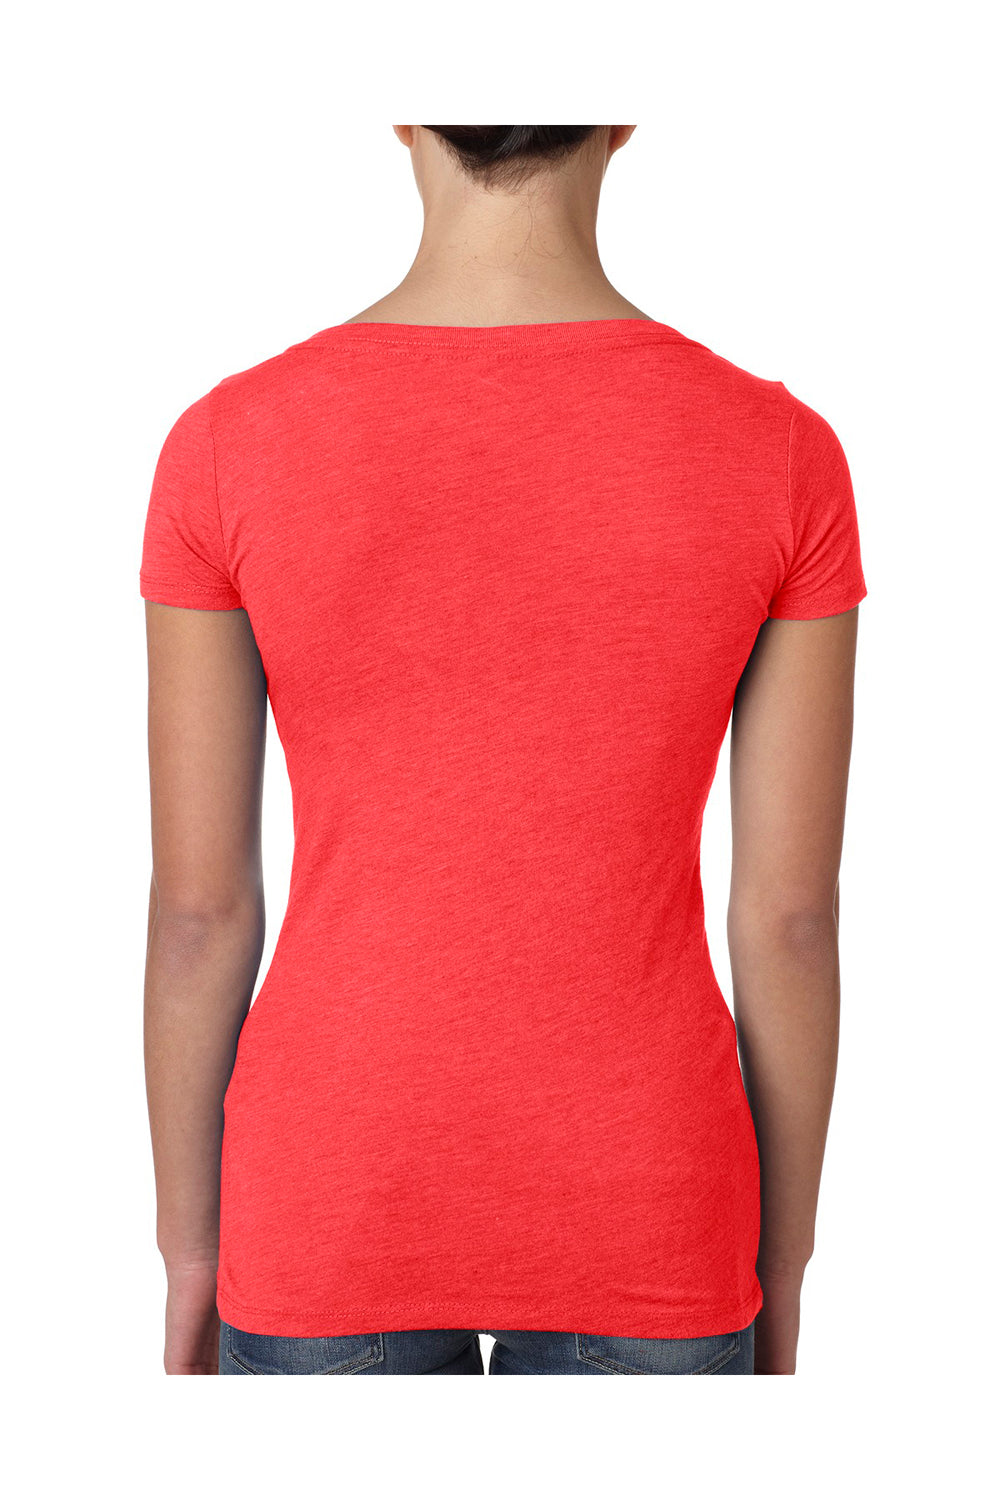 Next Level 6730 Womens Jersey Short Sleeve Scoop Neck T-Shirt Red Back